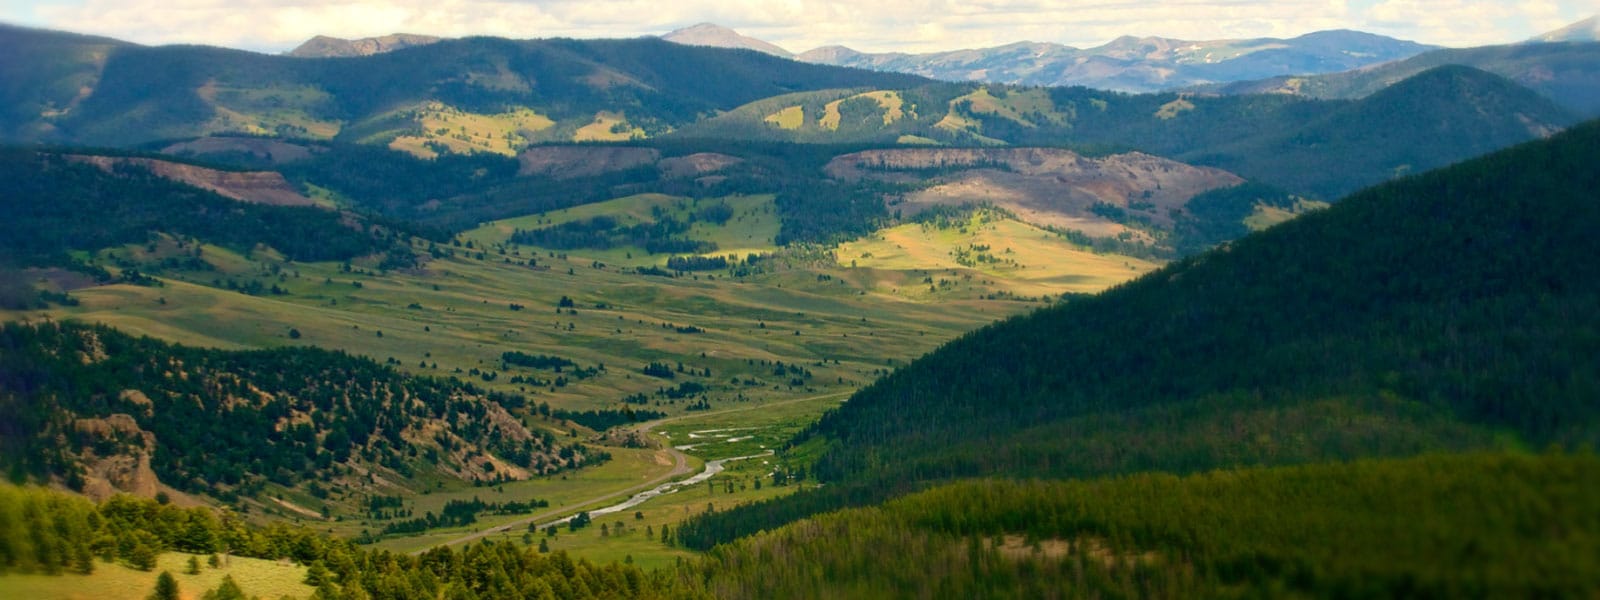 Montana backcountry vista